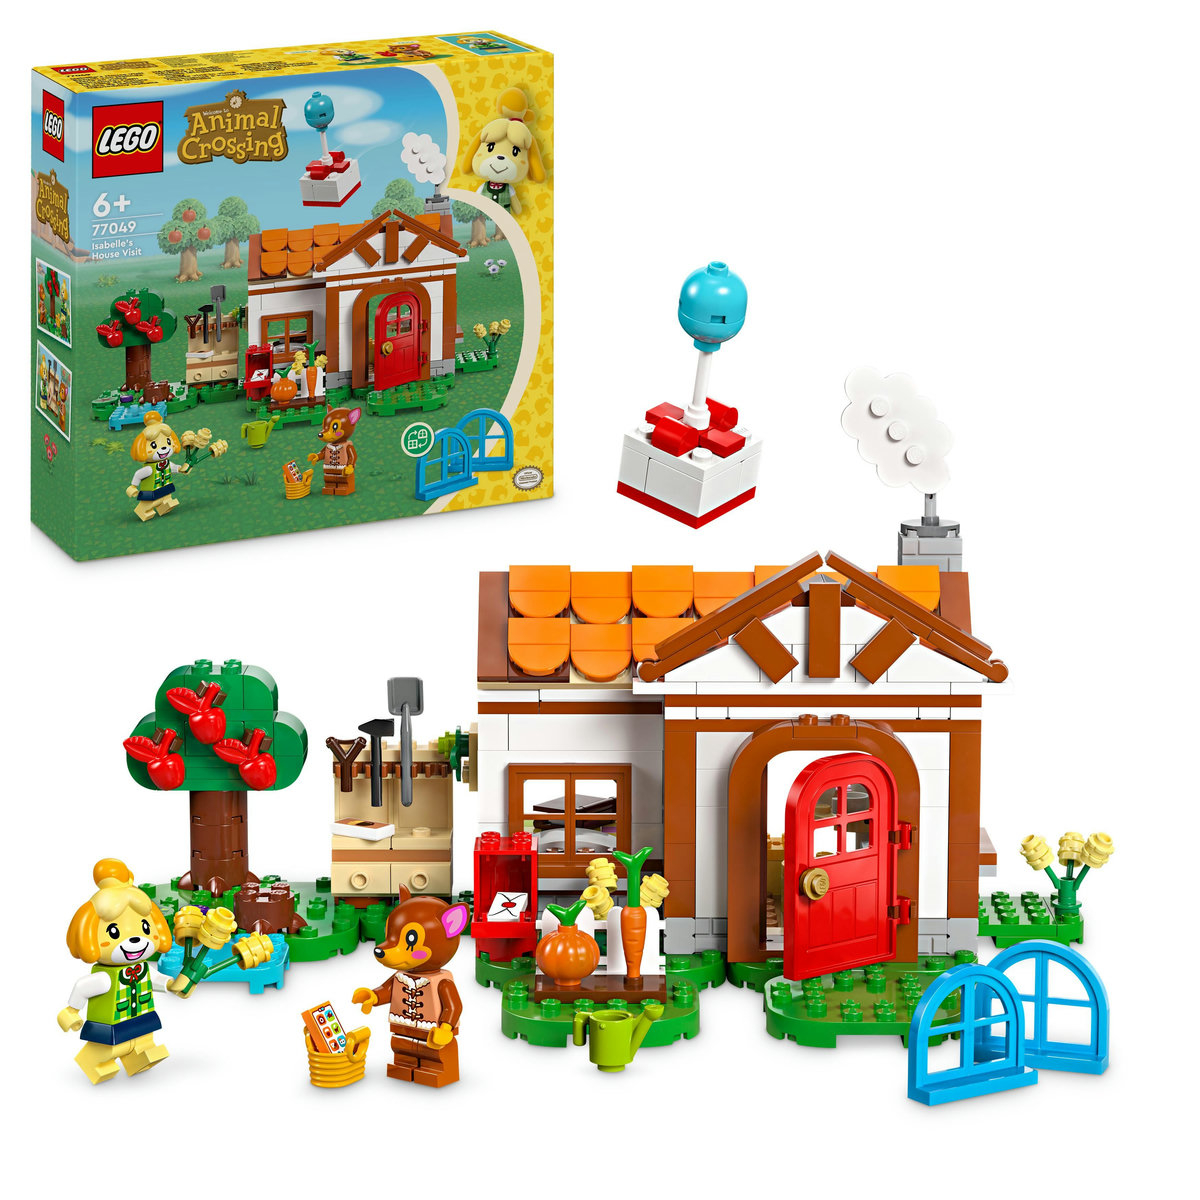 LEGO Animal Crossing - Isabelle vine in vizita 77049, 389 piese